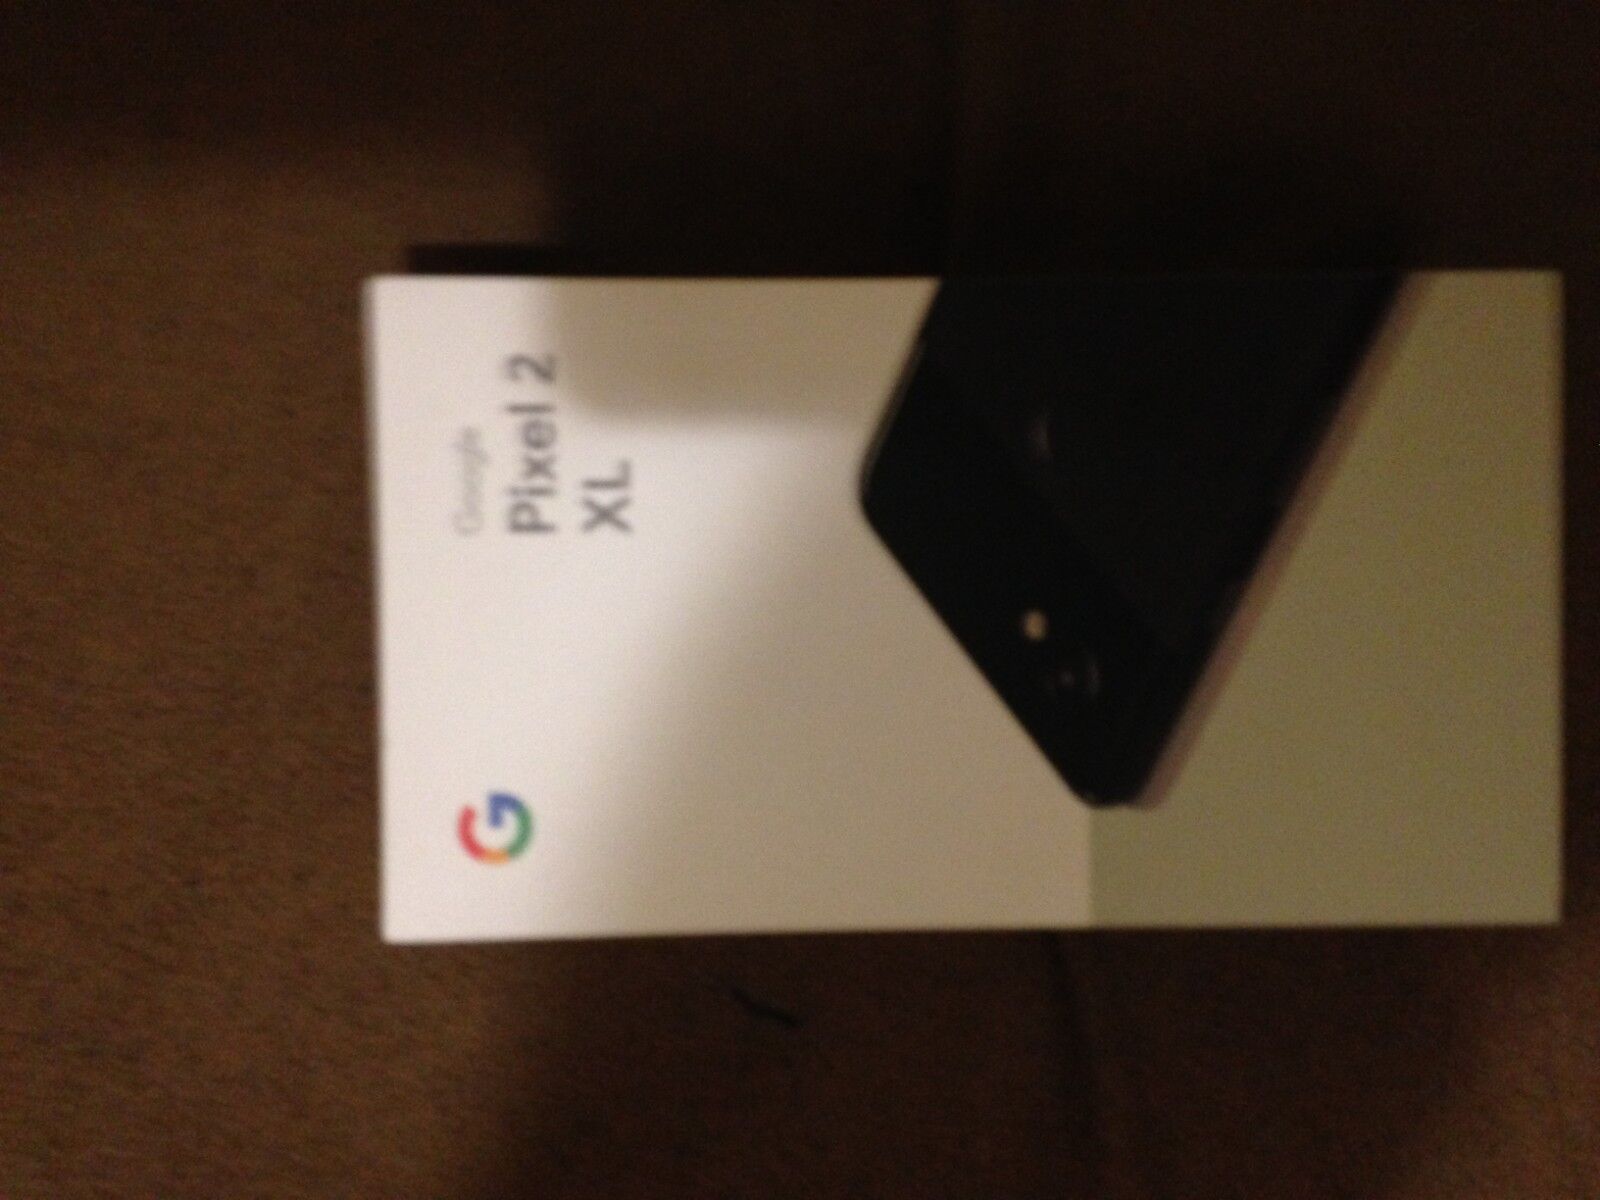 The Price of Google Pixel 2 XL – 64GB – Just Black (Unlocked) Brand New in Box Sealed | Google Pixel Phone